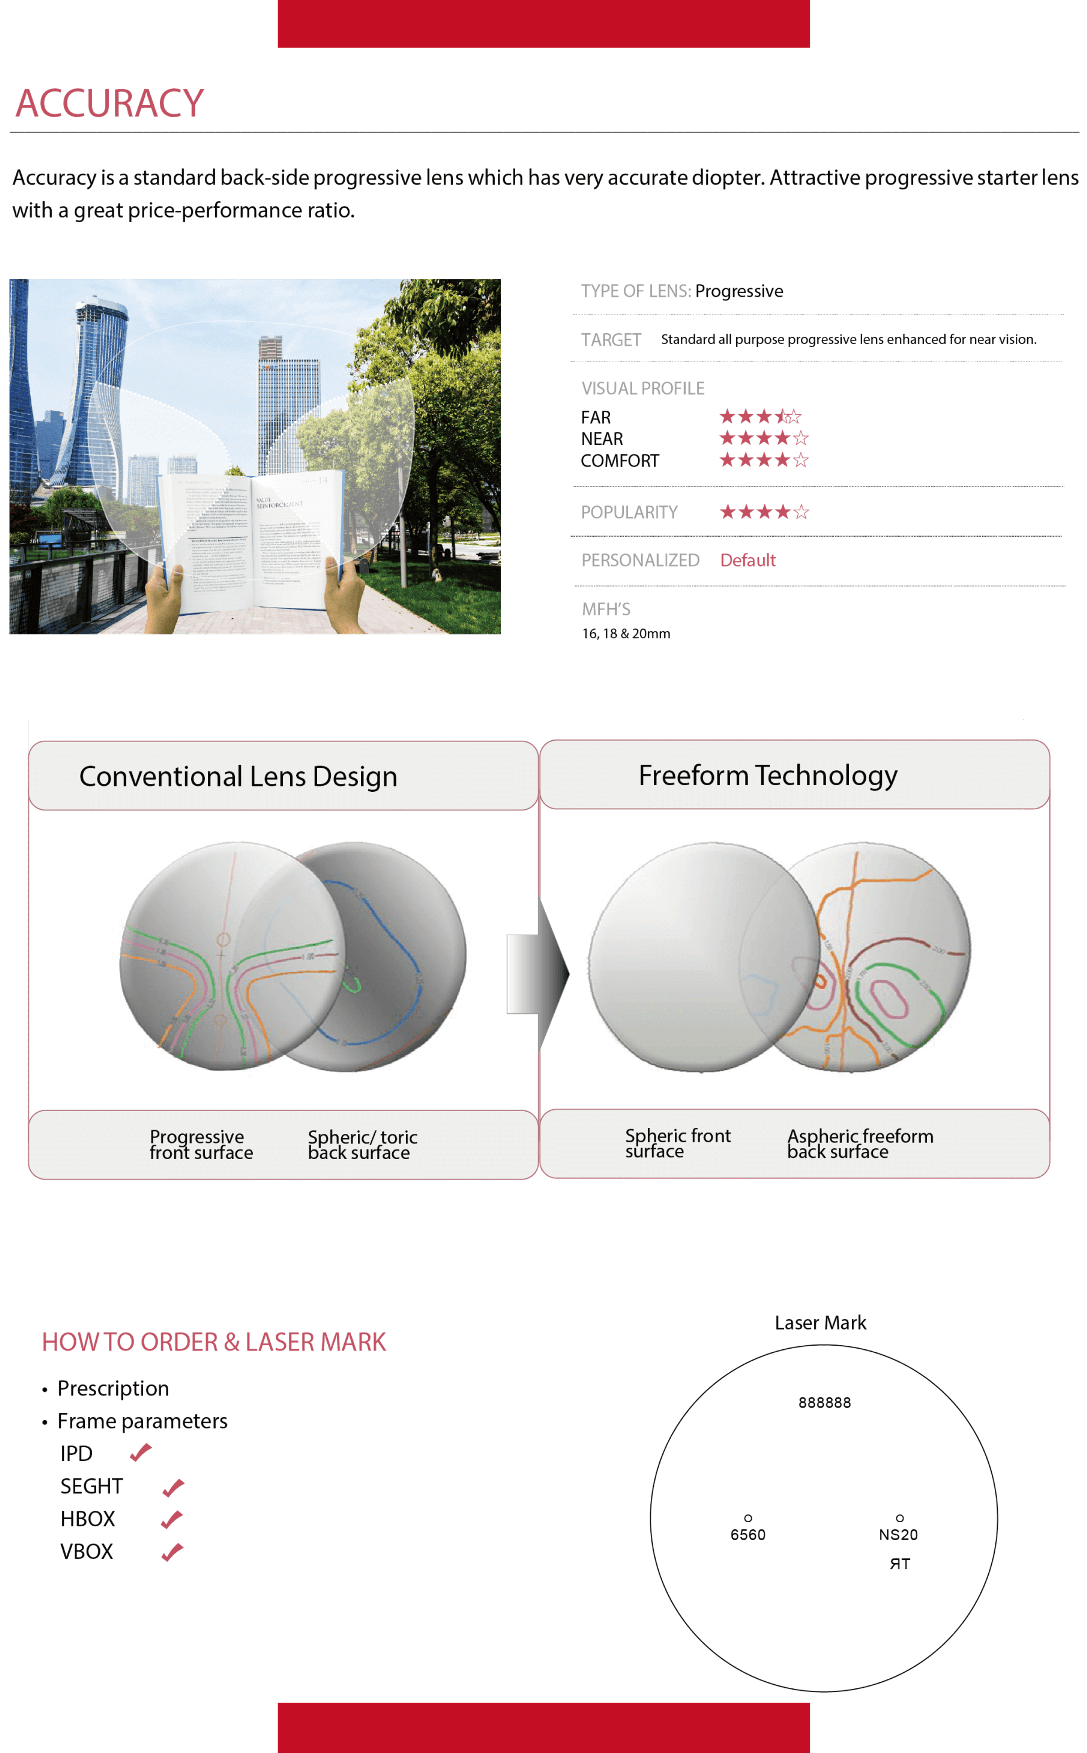 The Optometry Network - Digital Lens Designs - Accuracy